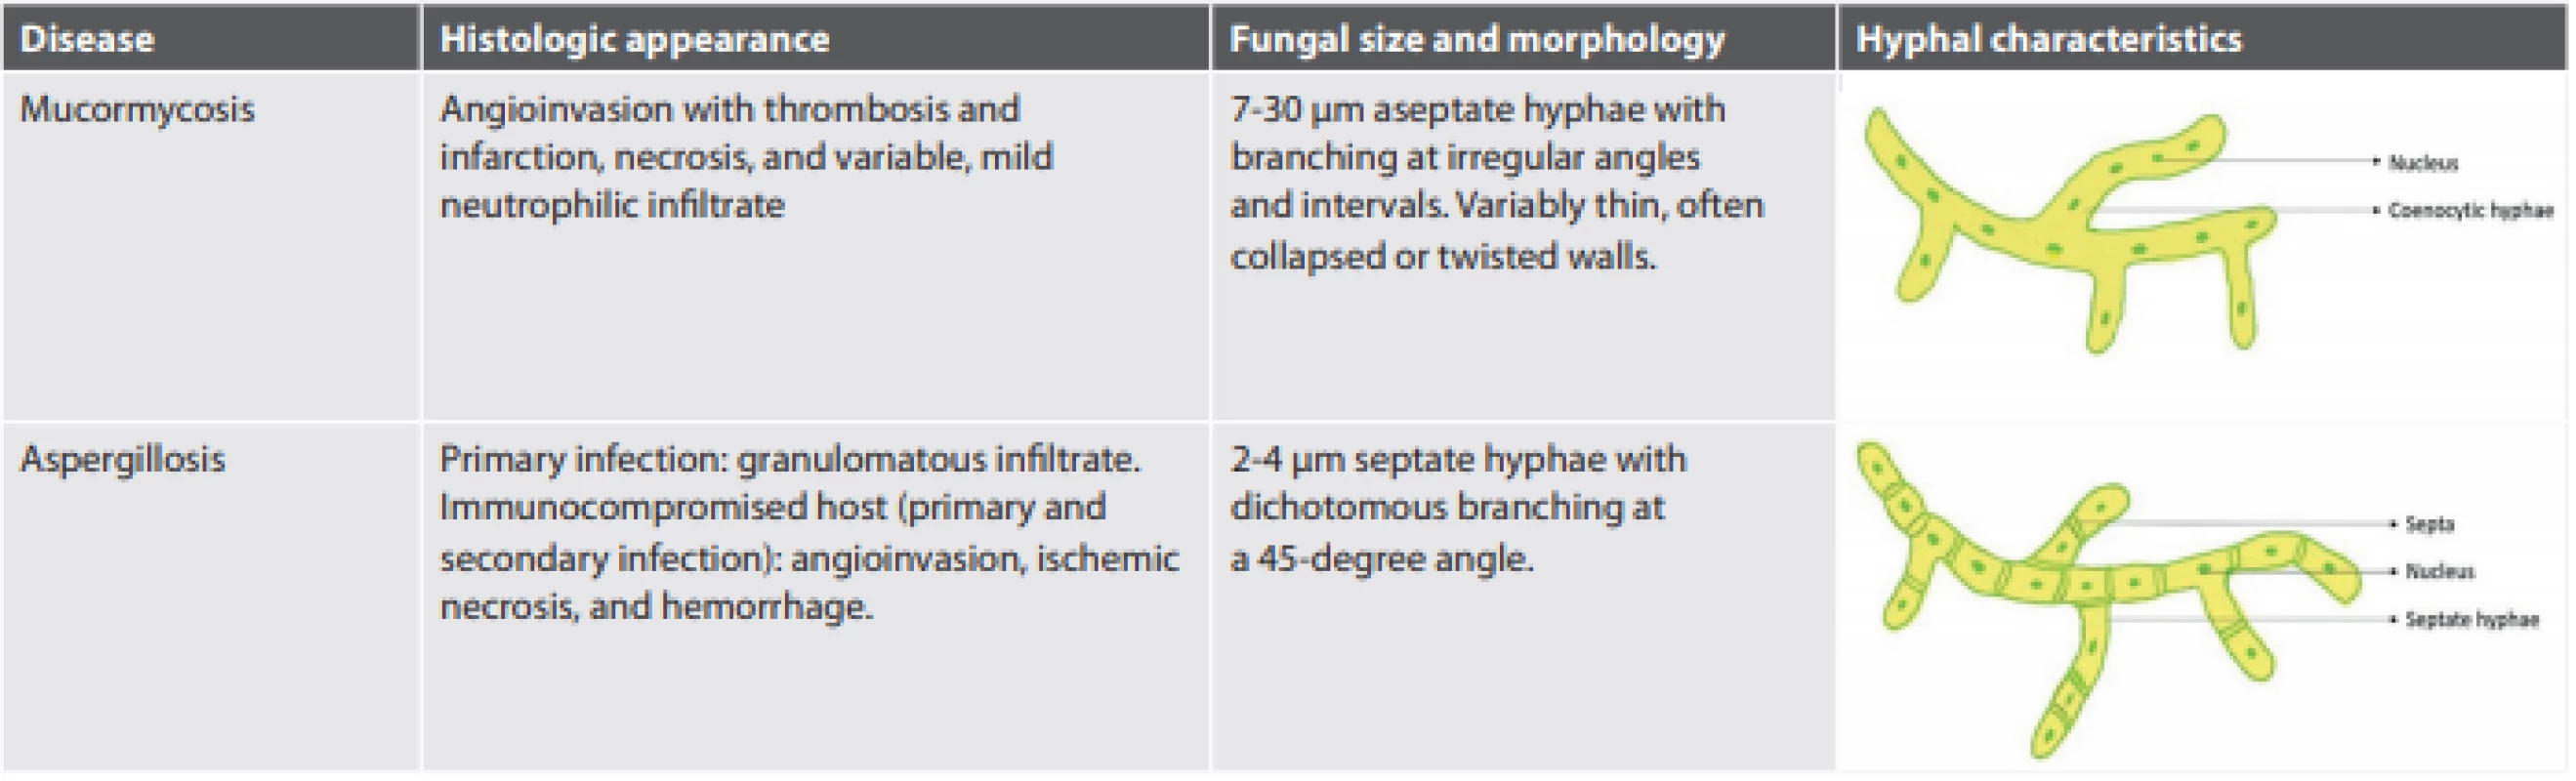 Characteristics of Mucormycosis versus Aspergillosis.